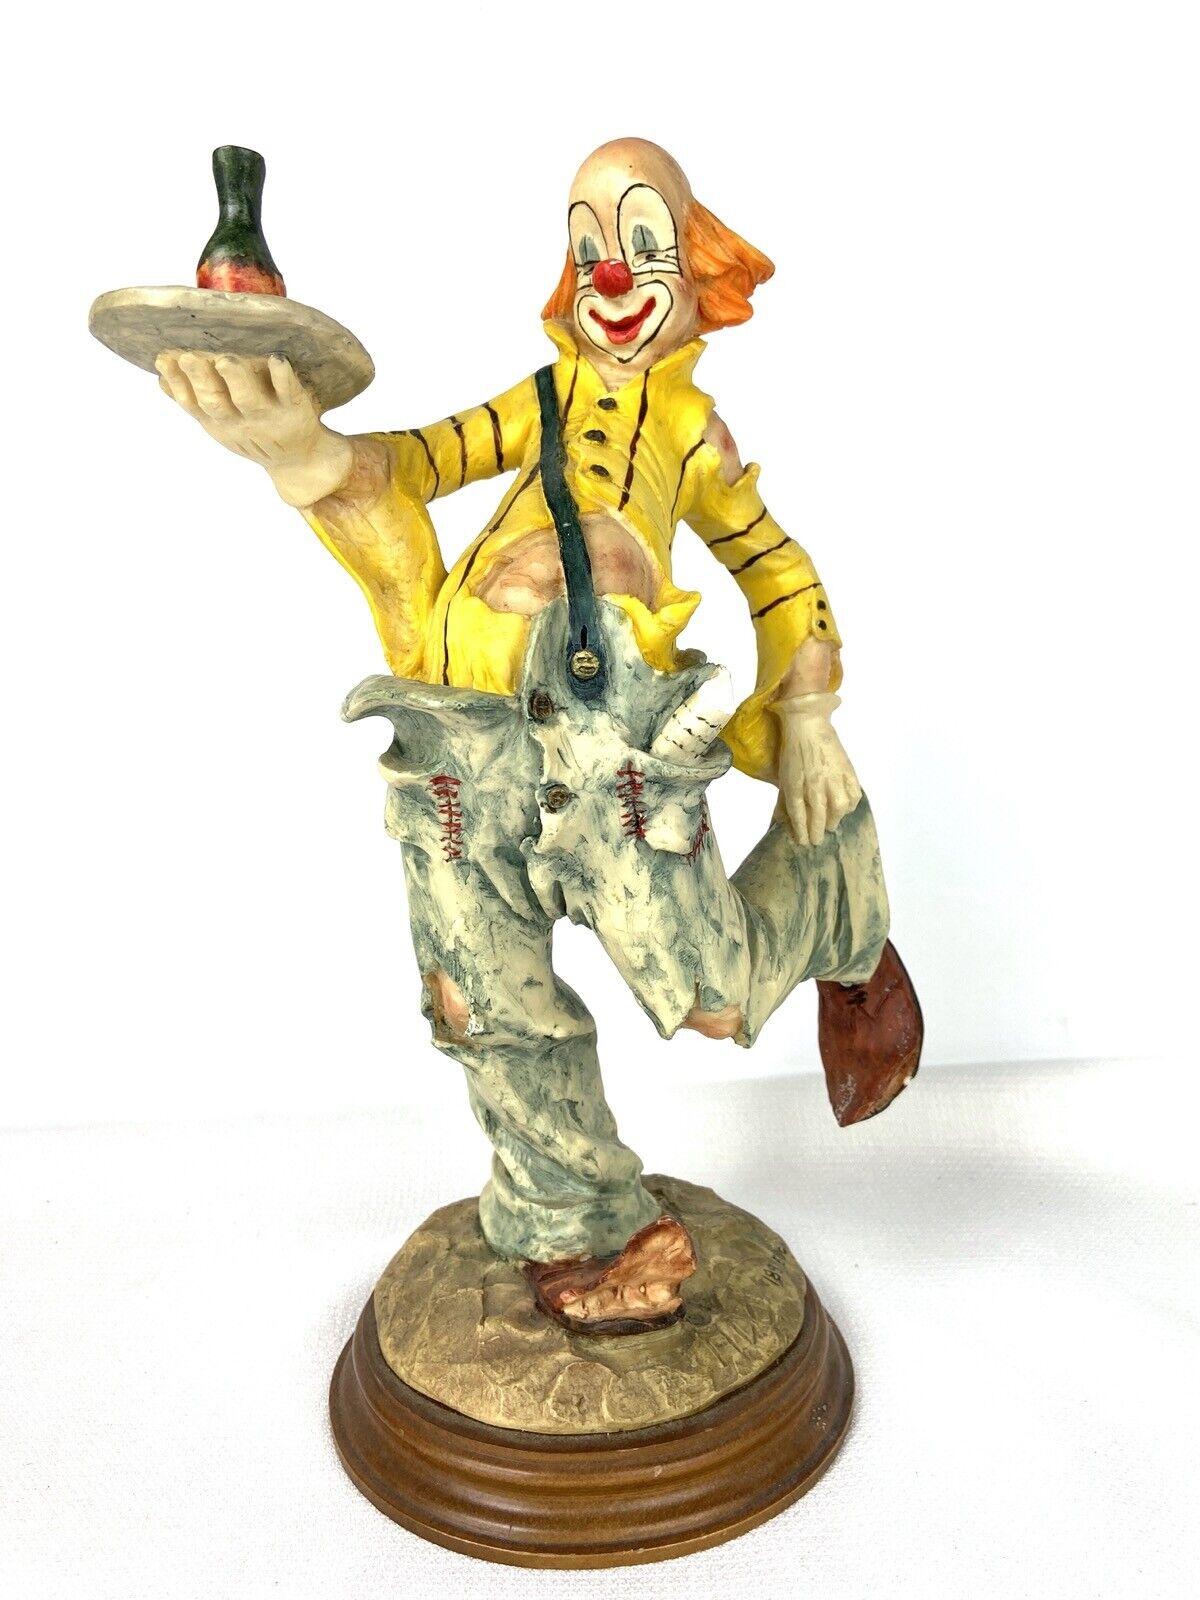 Dante by Ado for Creative World Waiter Clown Statue 12-1/2” Tall Resin 189/5000